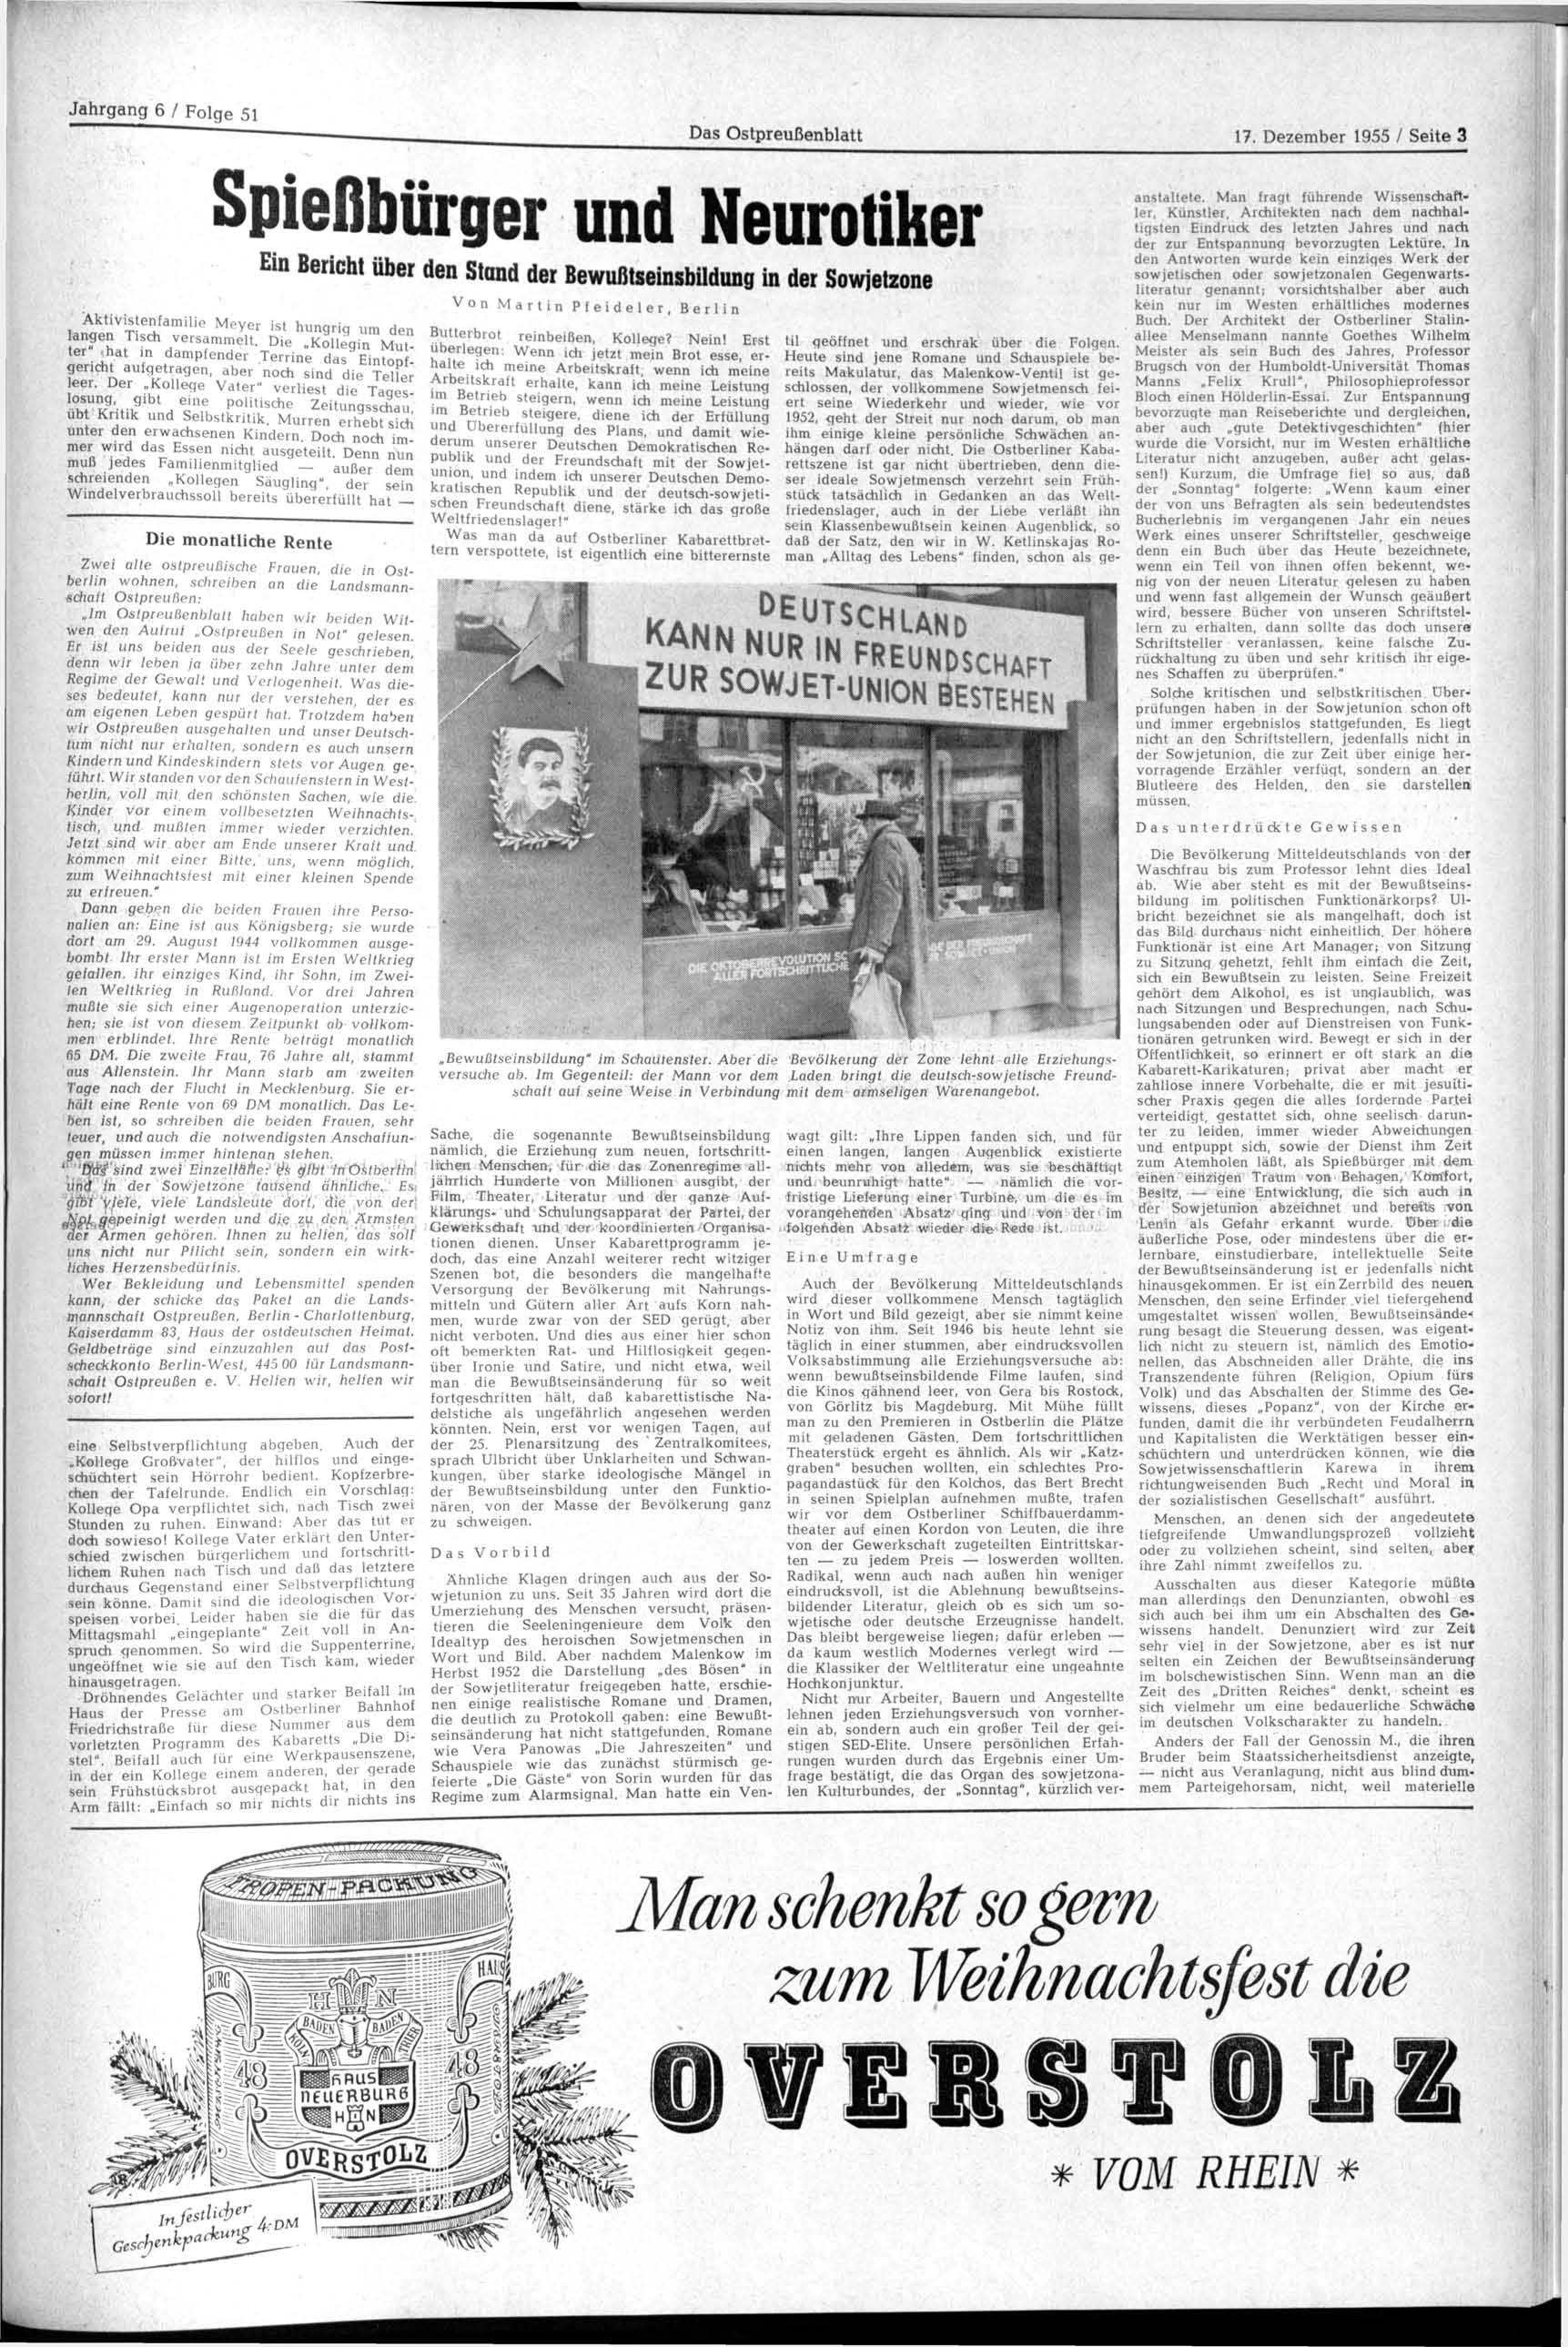 Jahrgang 6 / Folge 51 D a s Ostpreußenblatt 17. Dezember 1955 / Seite 3 Spießbürger und Neurouker Aktivis enfarnihe Meyer ist hungrig um den langen Tisch versammelt. Die.KoUeginMu ter.